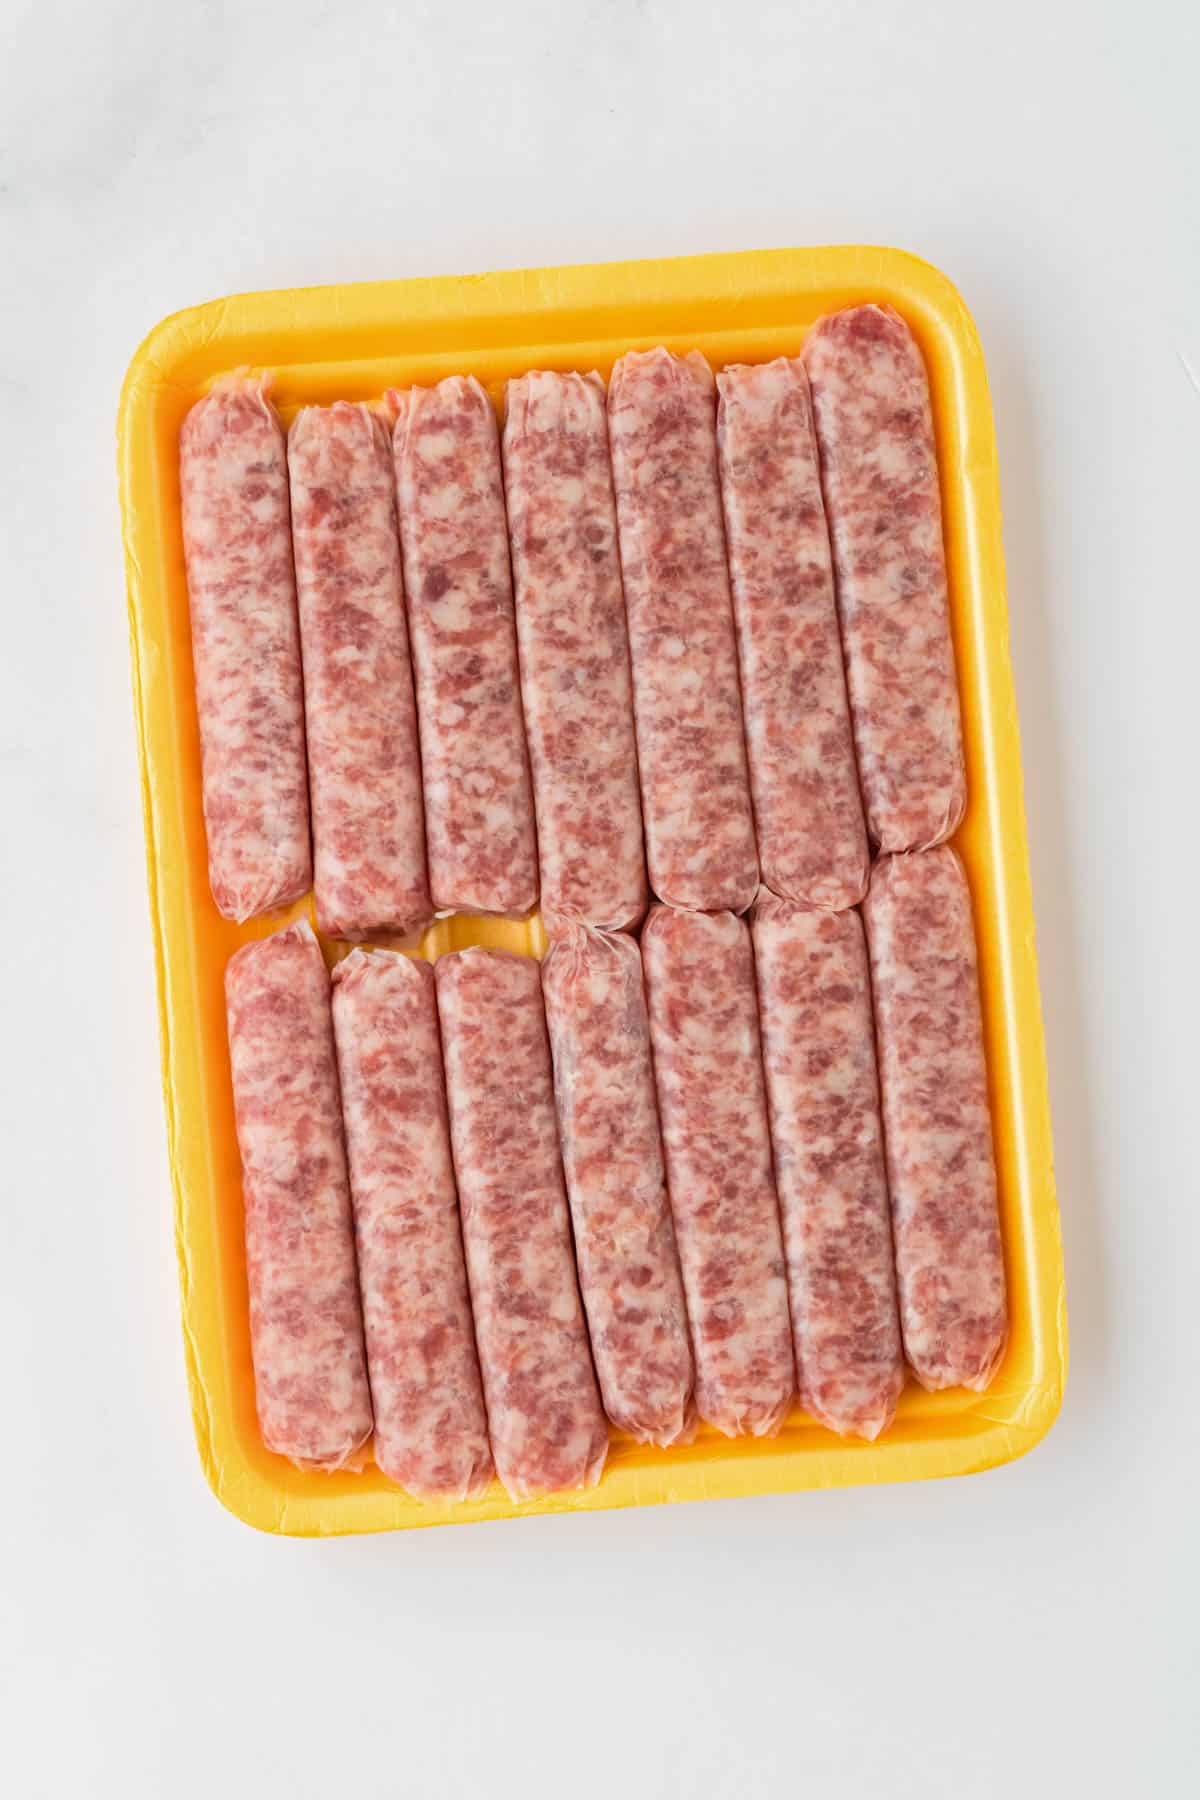 Raw breakfast sausage links in their package.